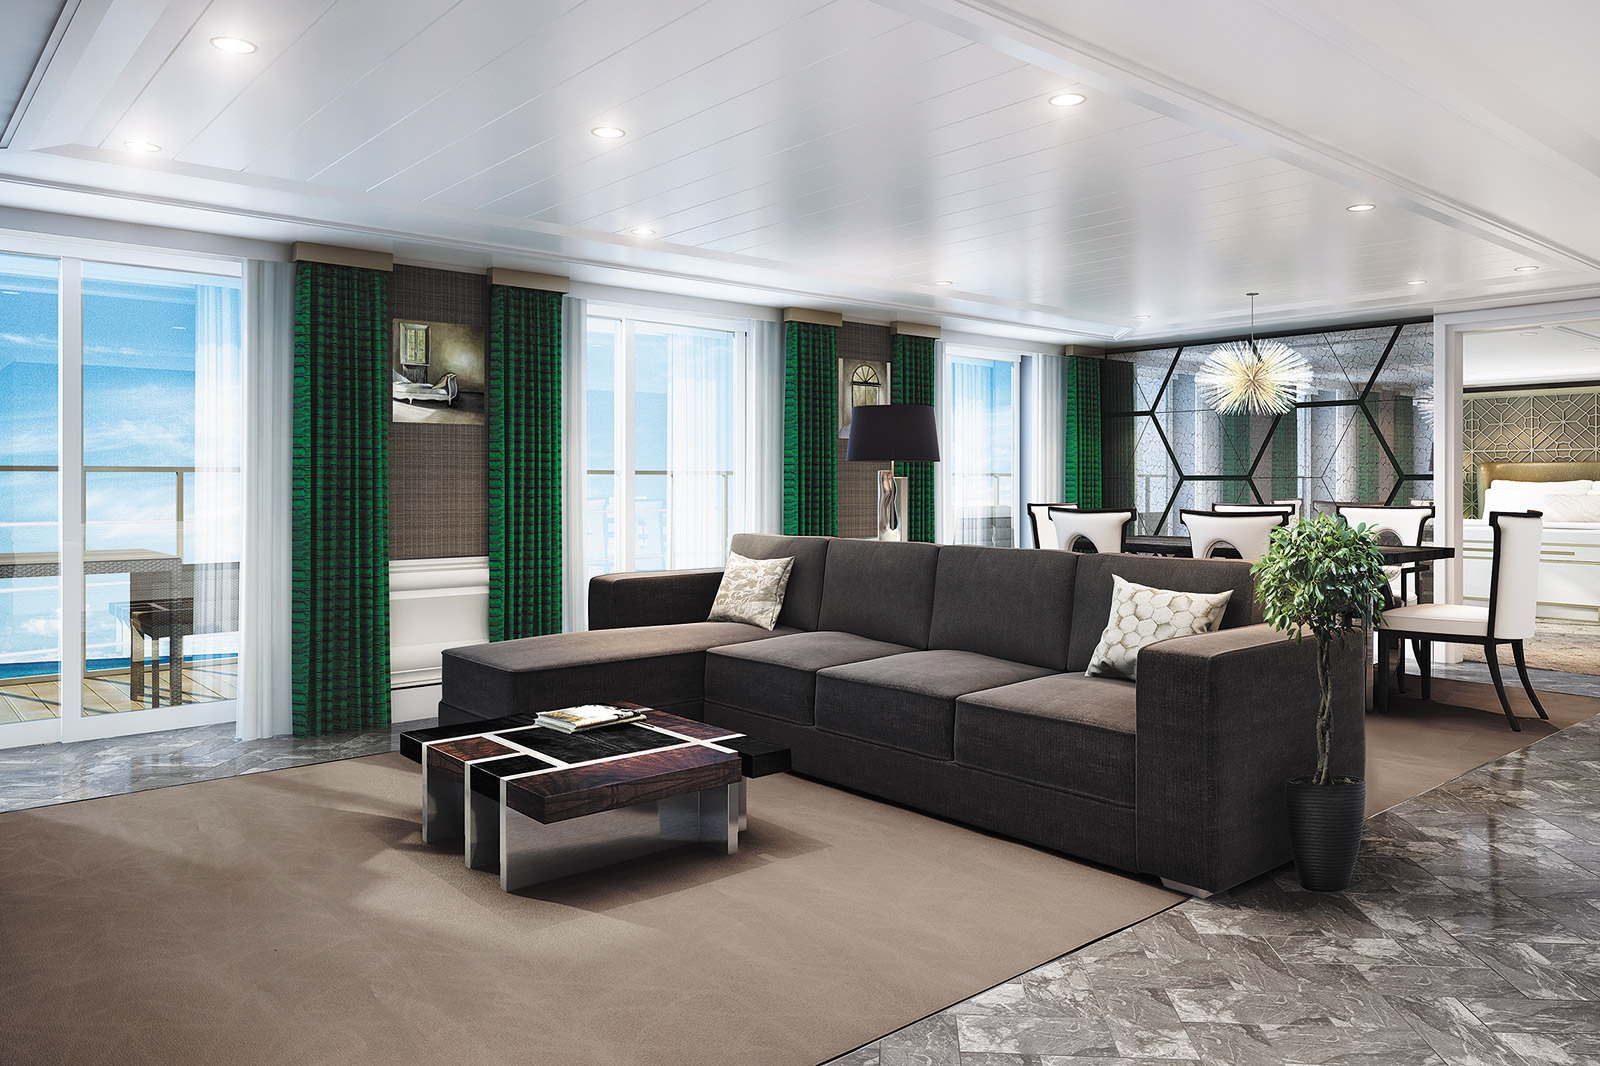 Luxury Cruises Regent Seven Seas Splendor